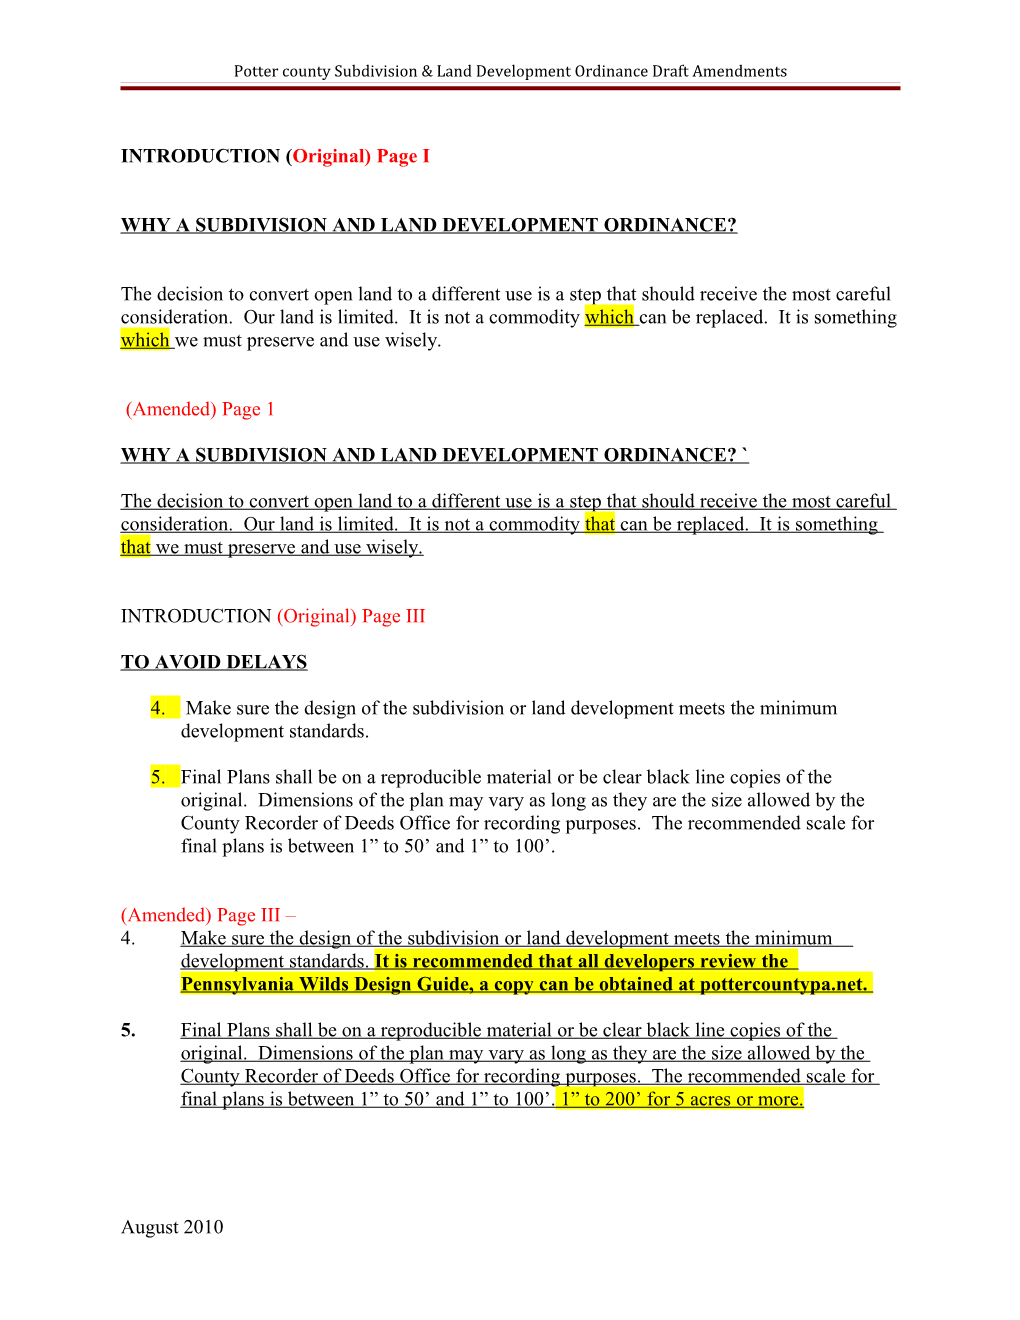 Potter County Subdivision & Land Development Ordinance Draft Amendments